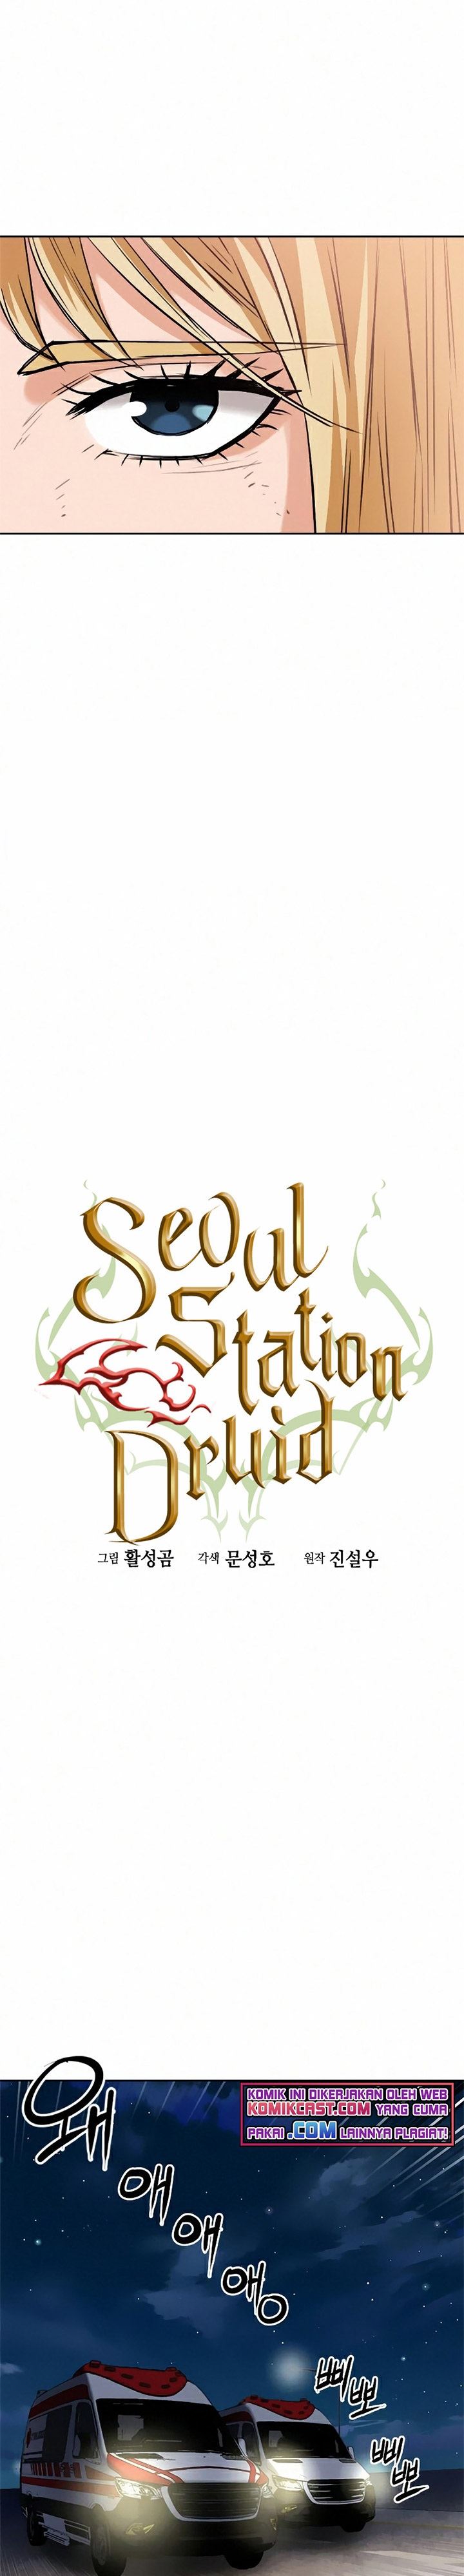 Seoul Station Druid Chapter 27